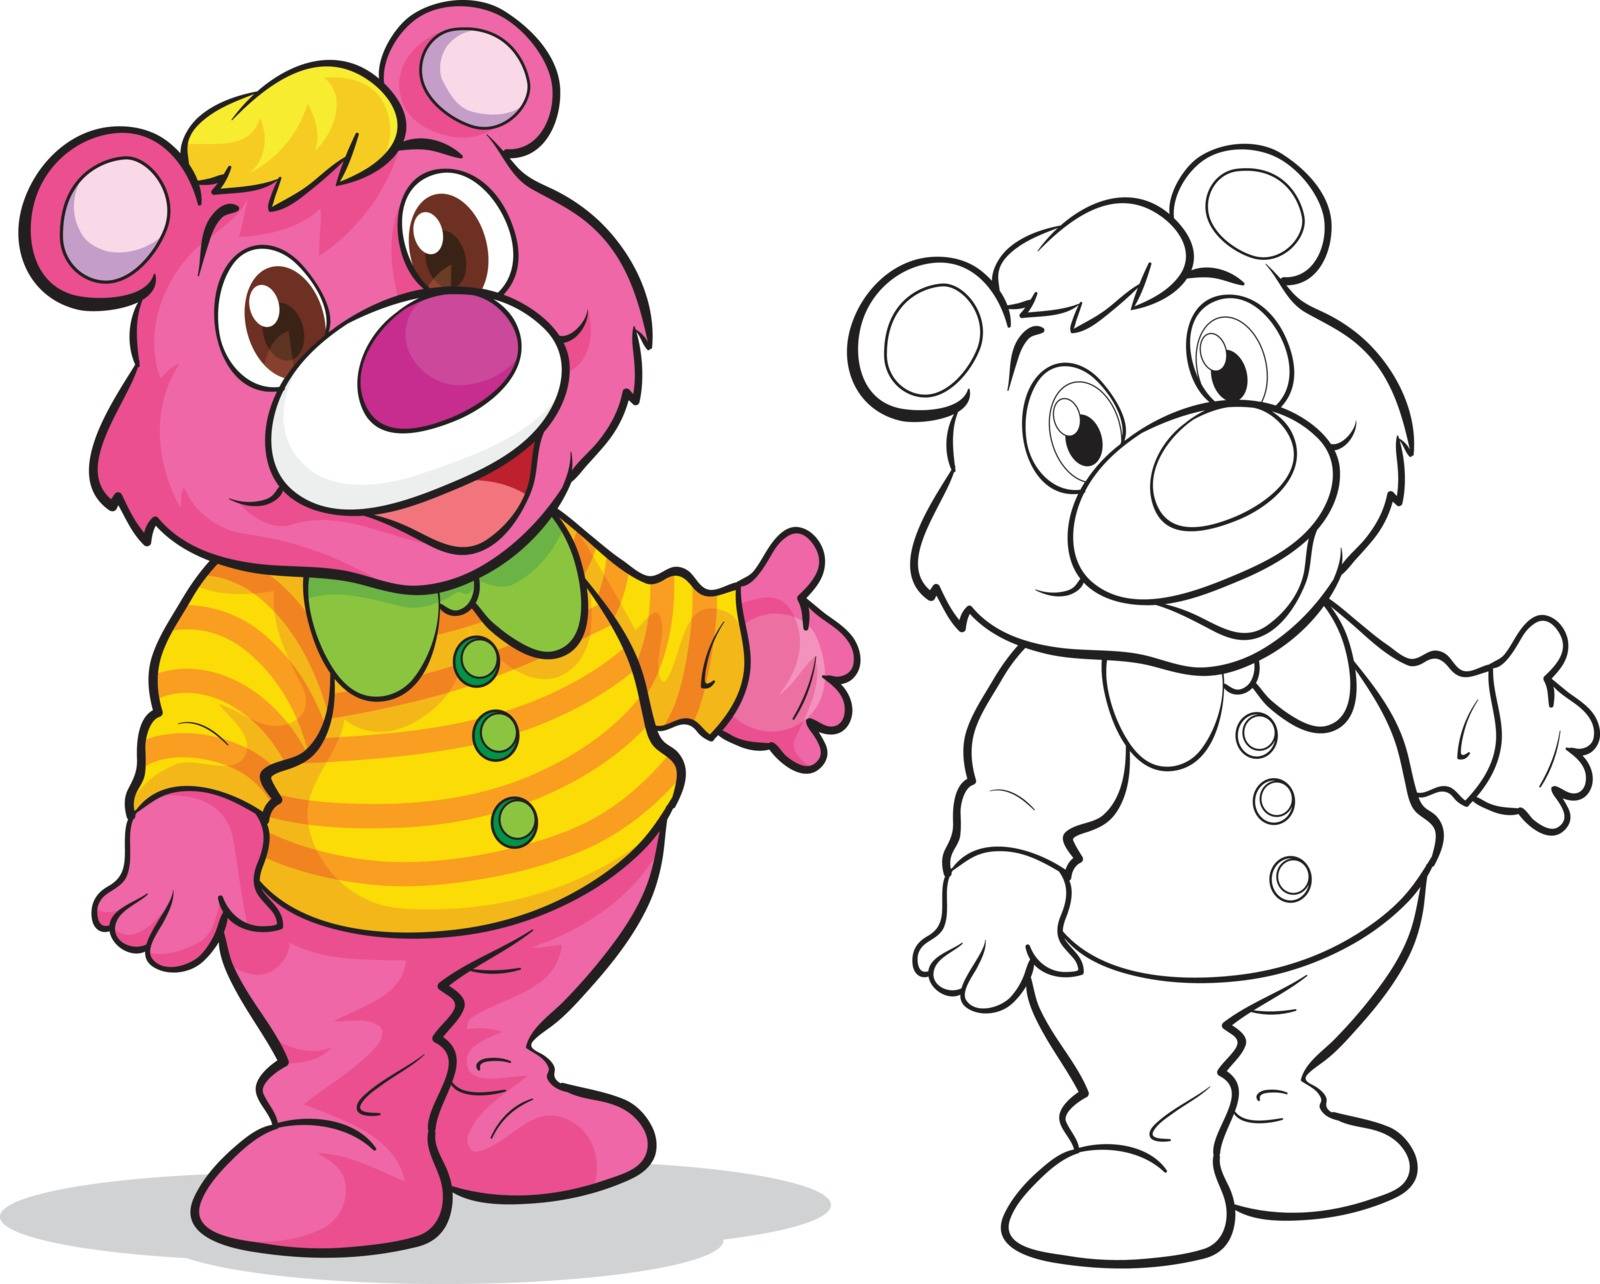 Cute bear cartoon mascot by niwat_s@hotmail.com